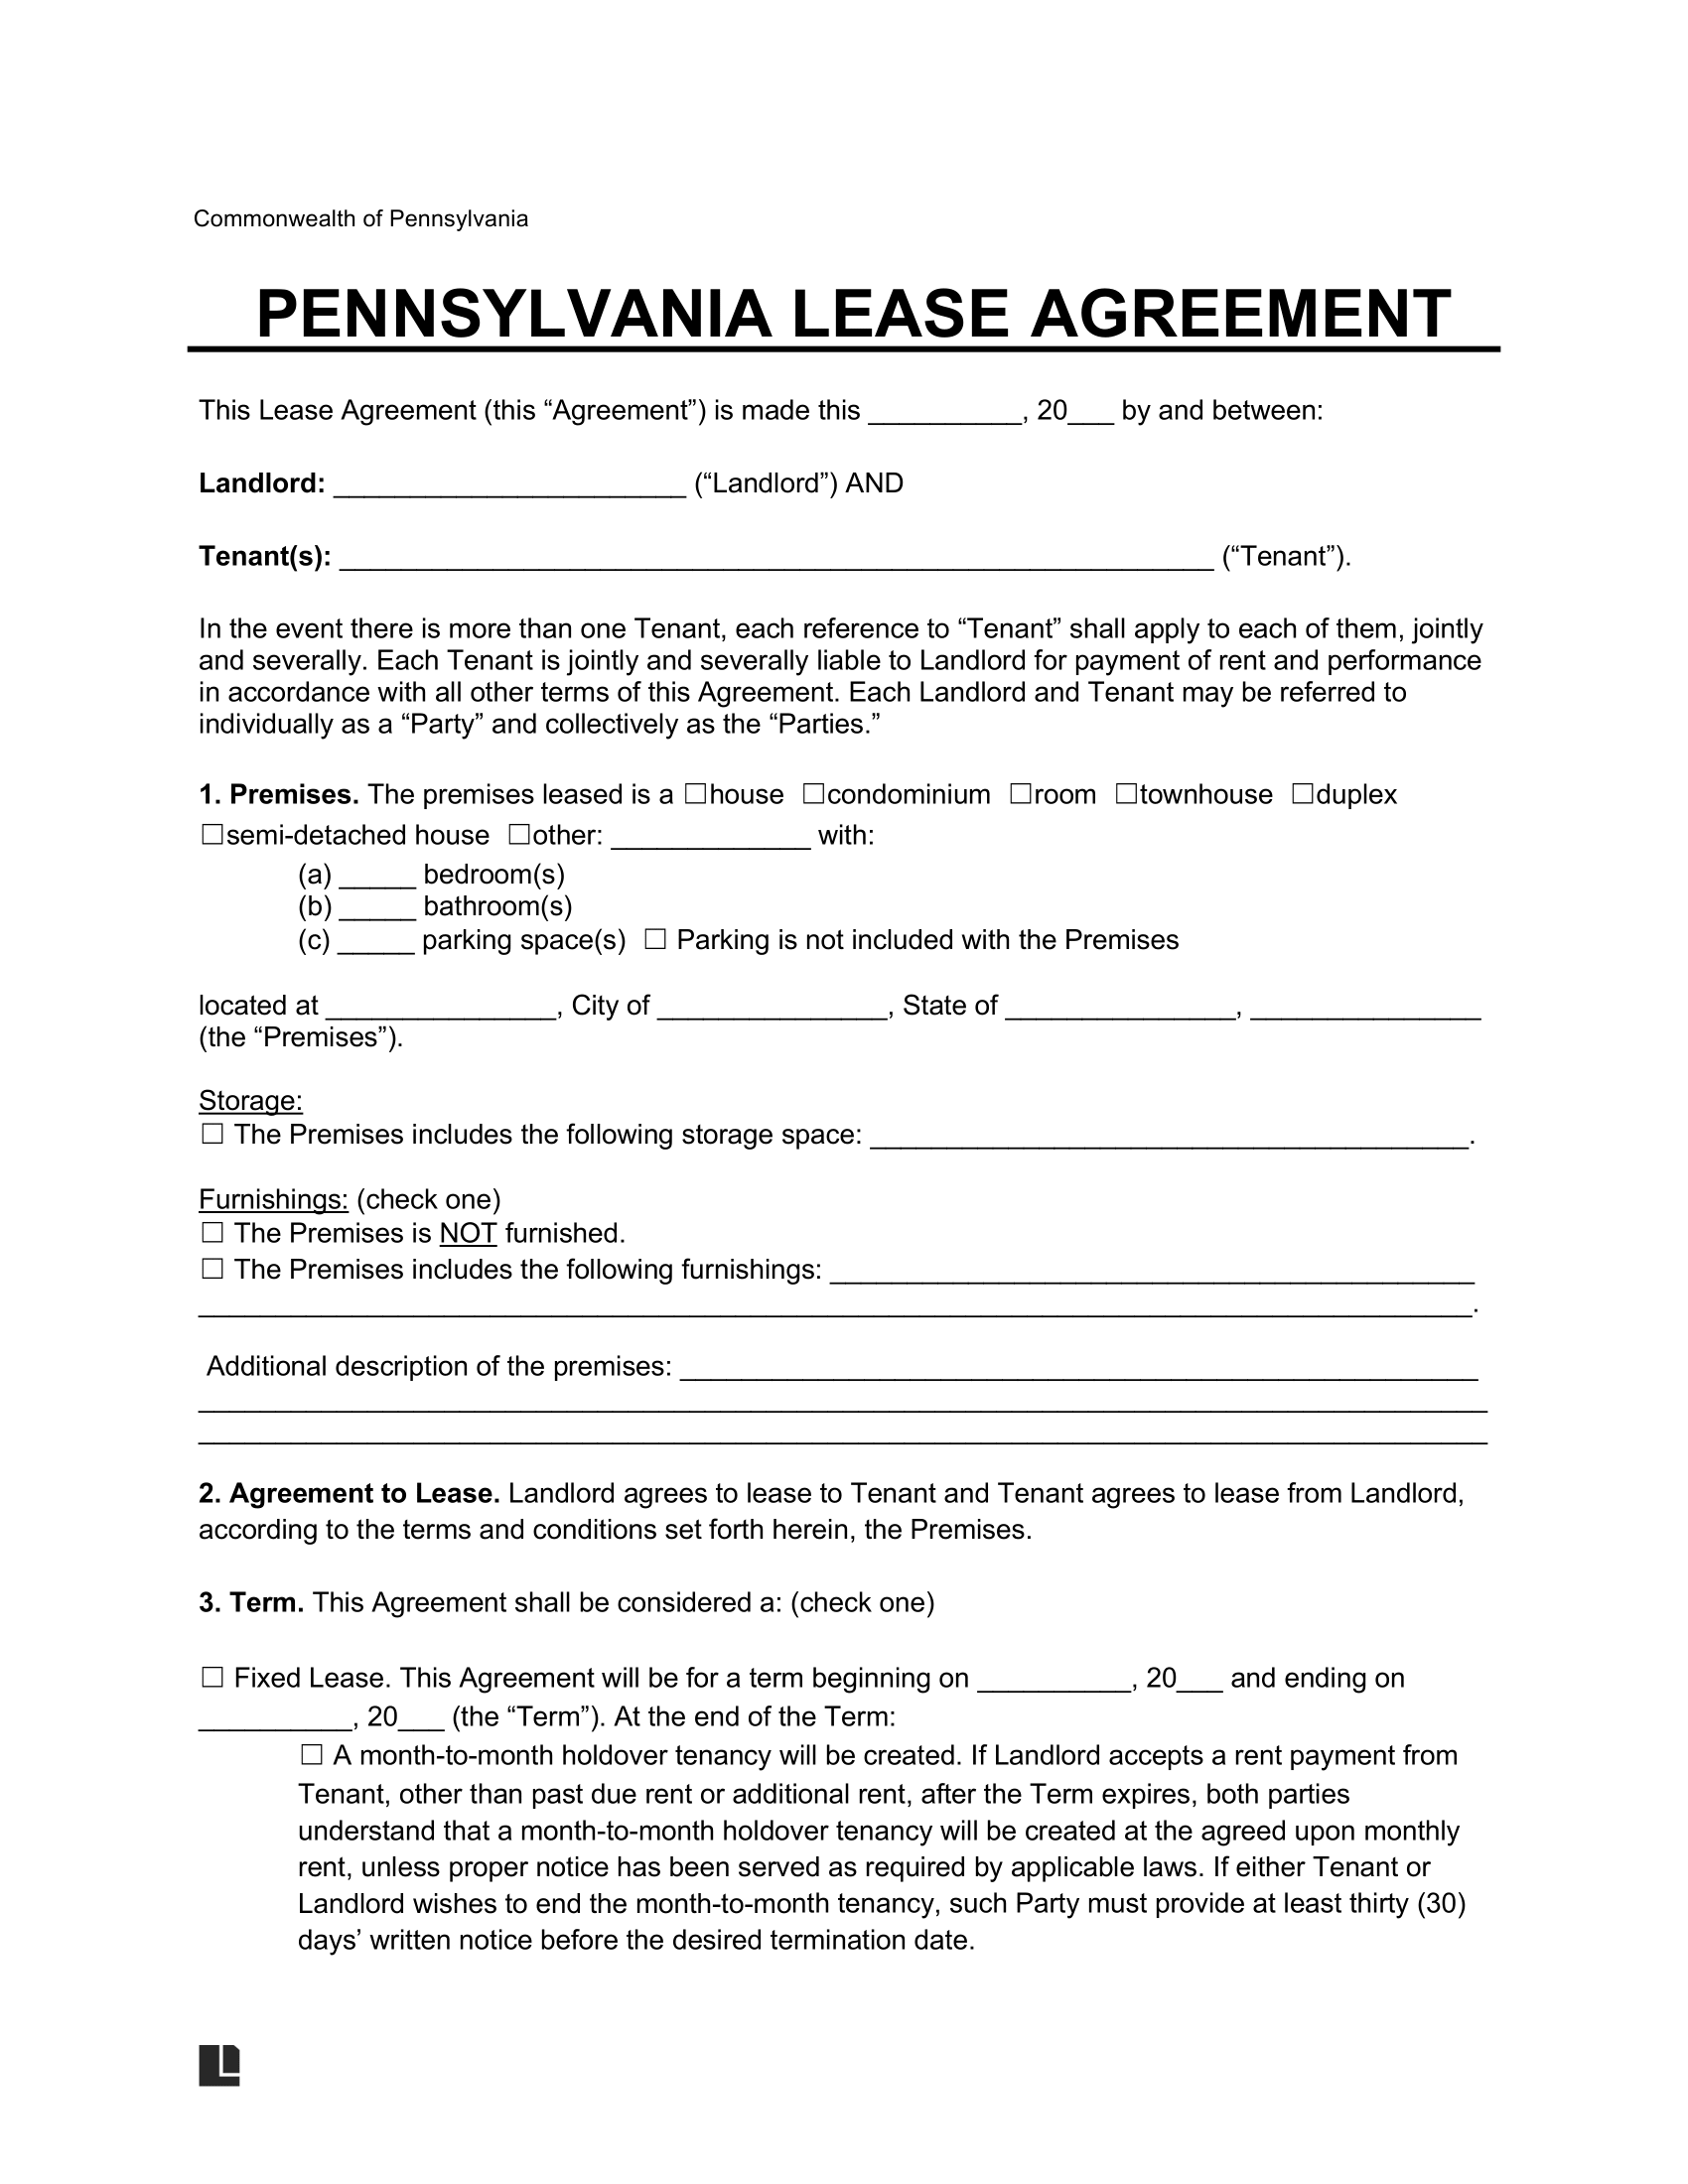 Pennsylvania Lease Agreement Template